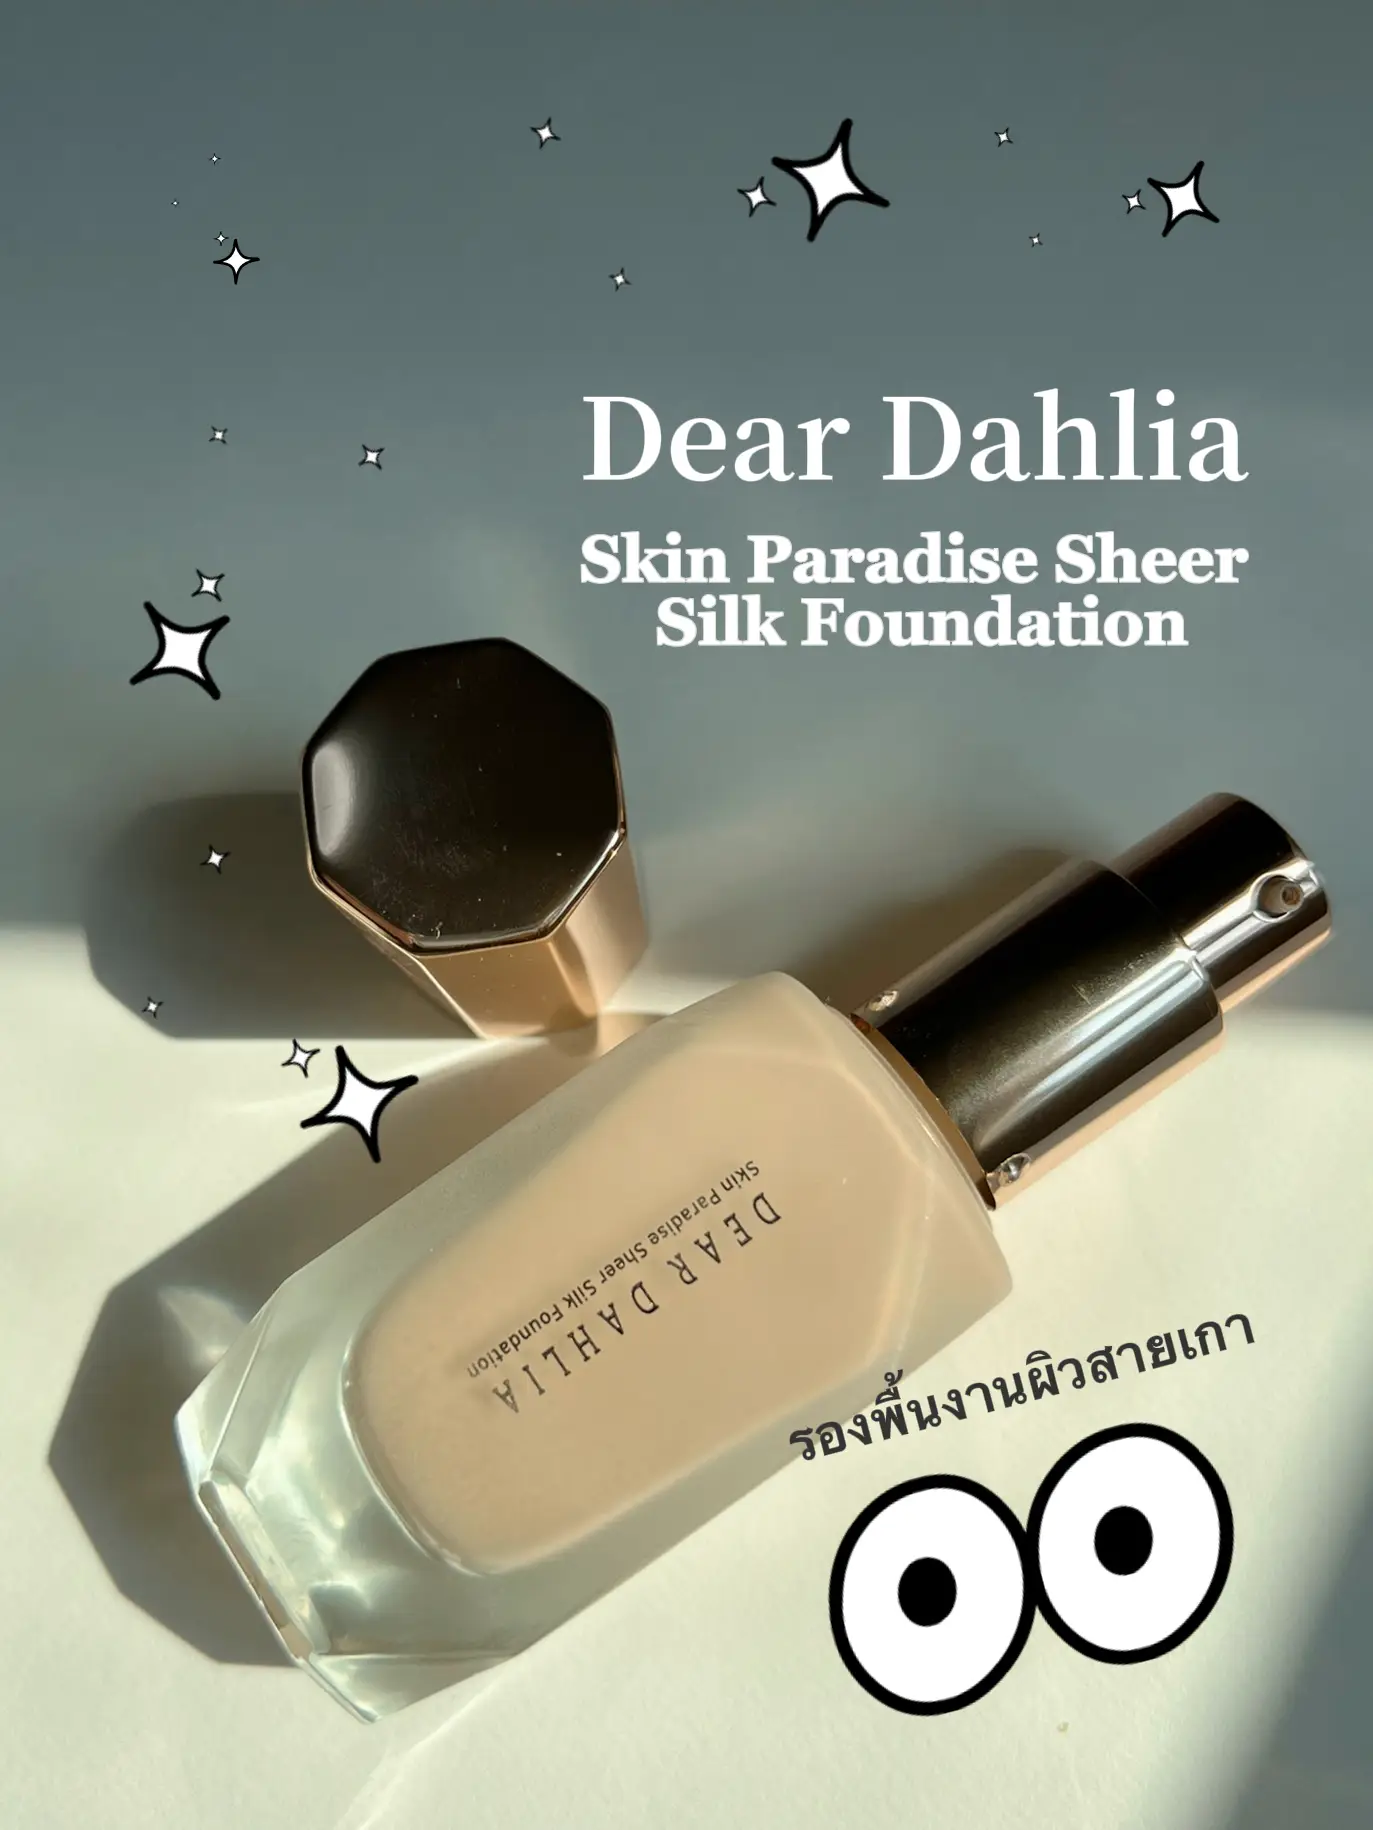 Skin Paradise Sheer Silk Foundation – Dear Dahlia